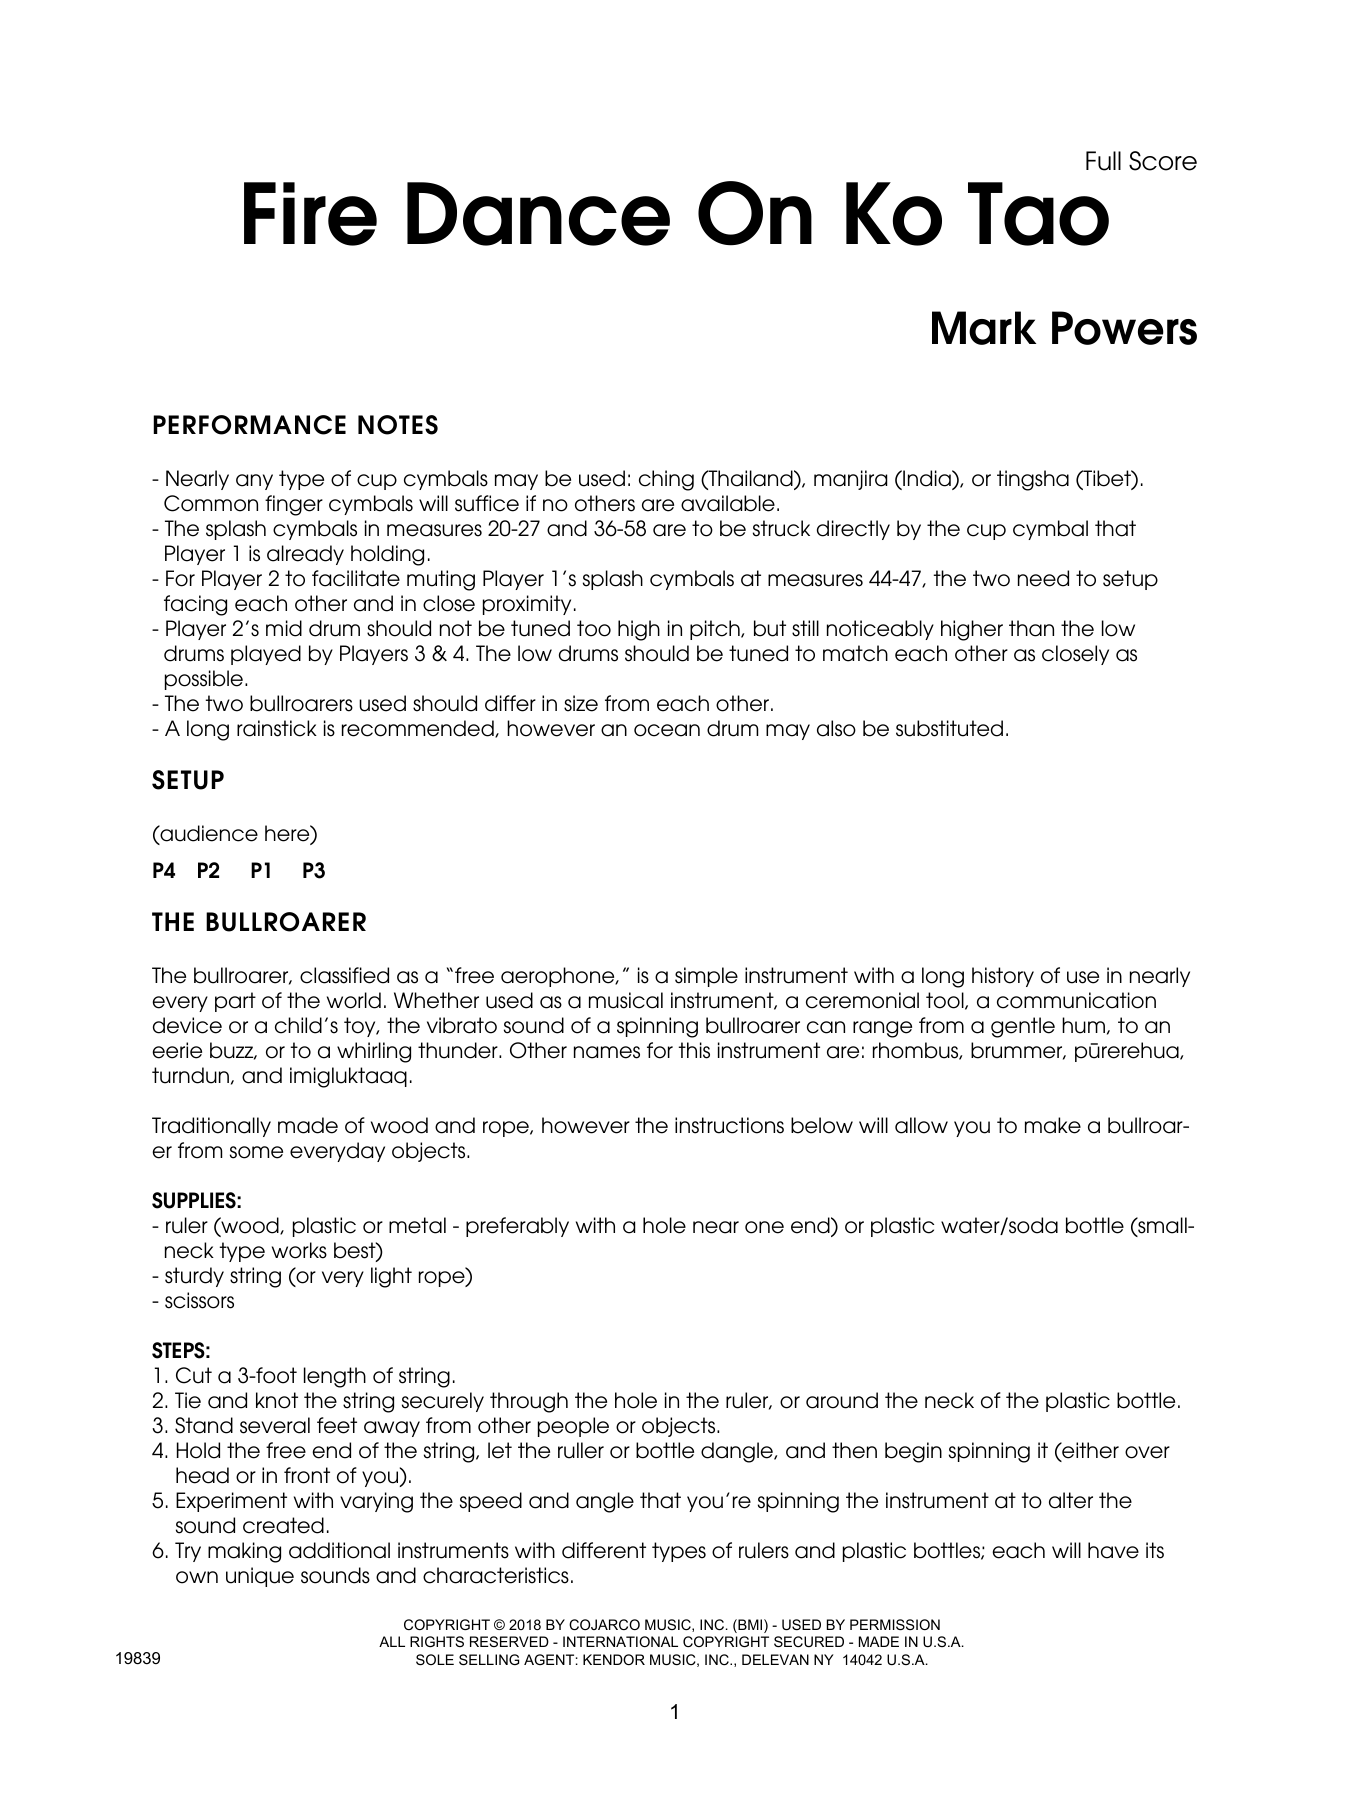 Download Mark Powers Fire Dance On Ko Tao - Full Score Sheet Music